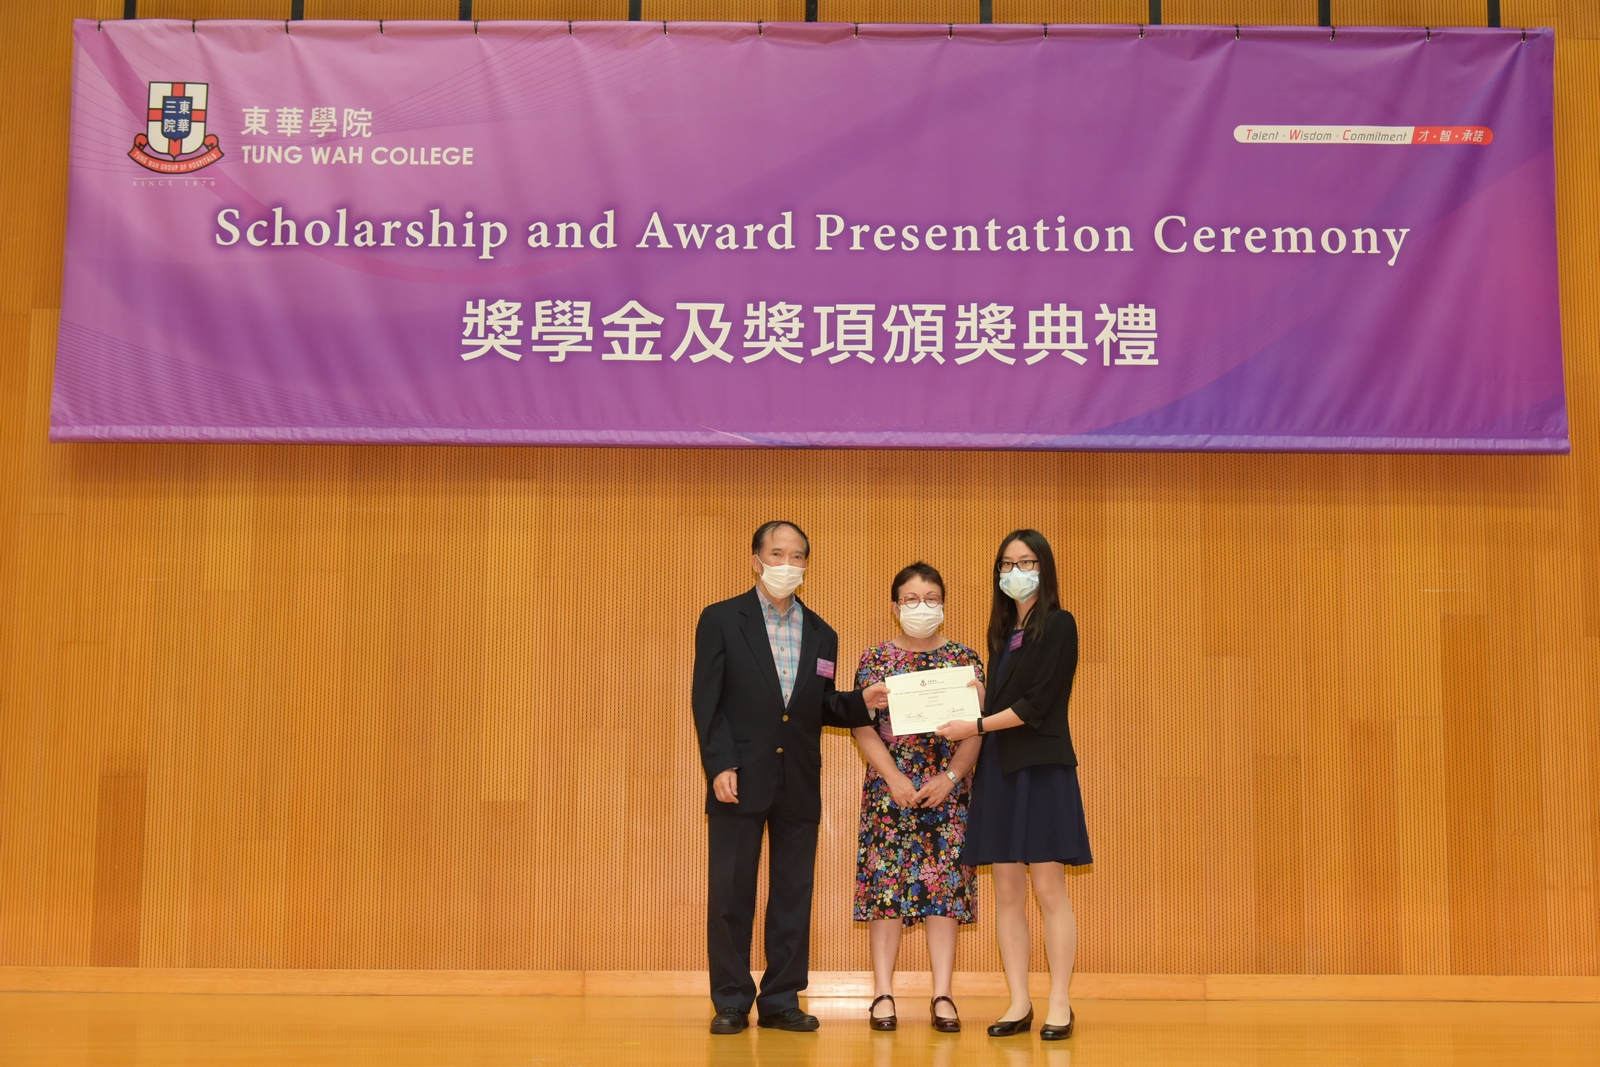 Scholarship and Award Presentation Ceremony 2020